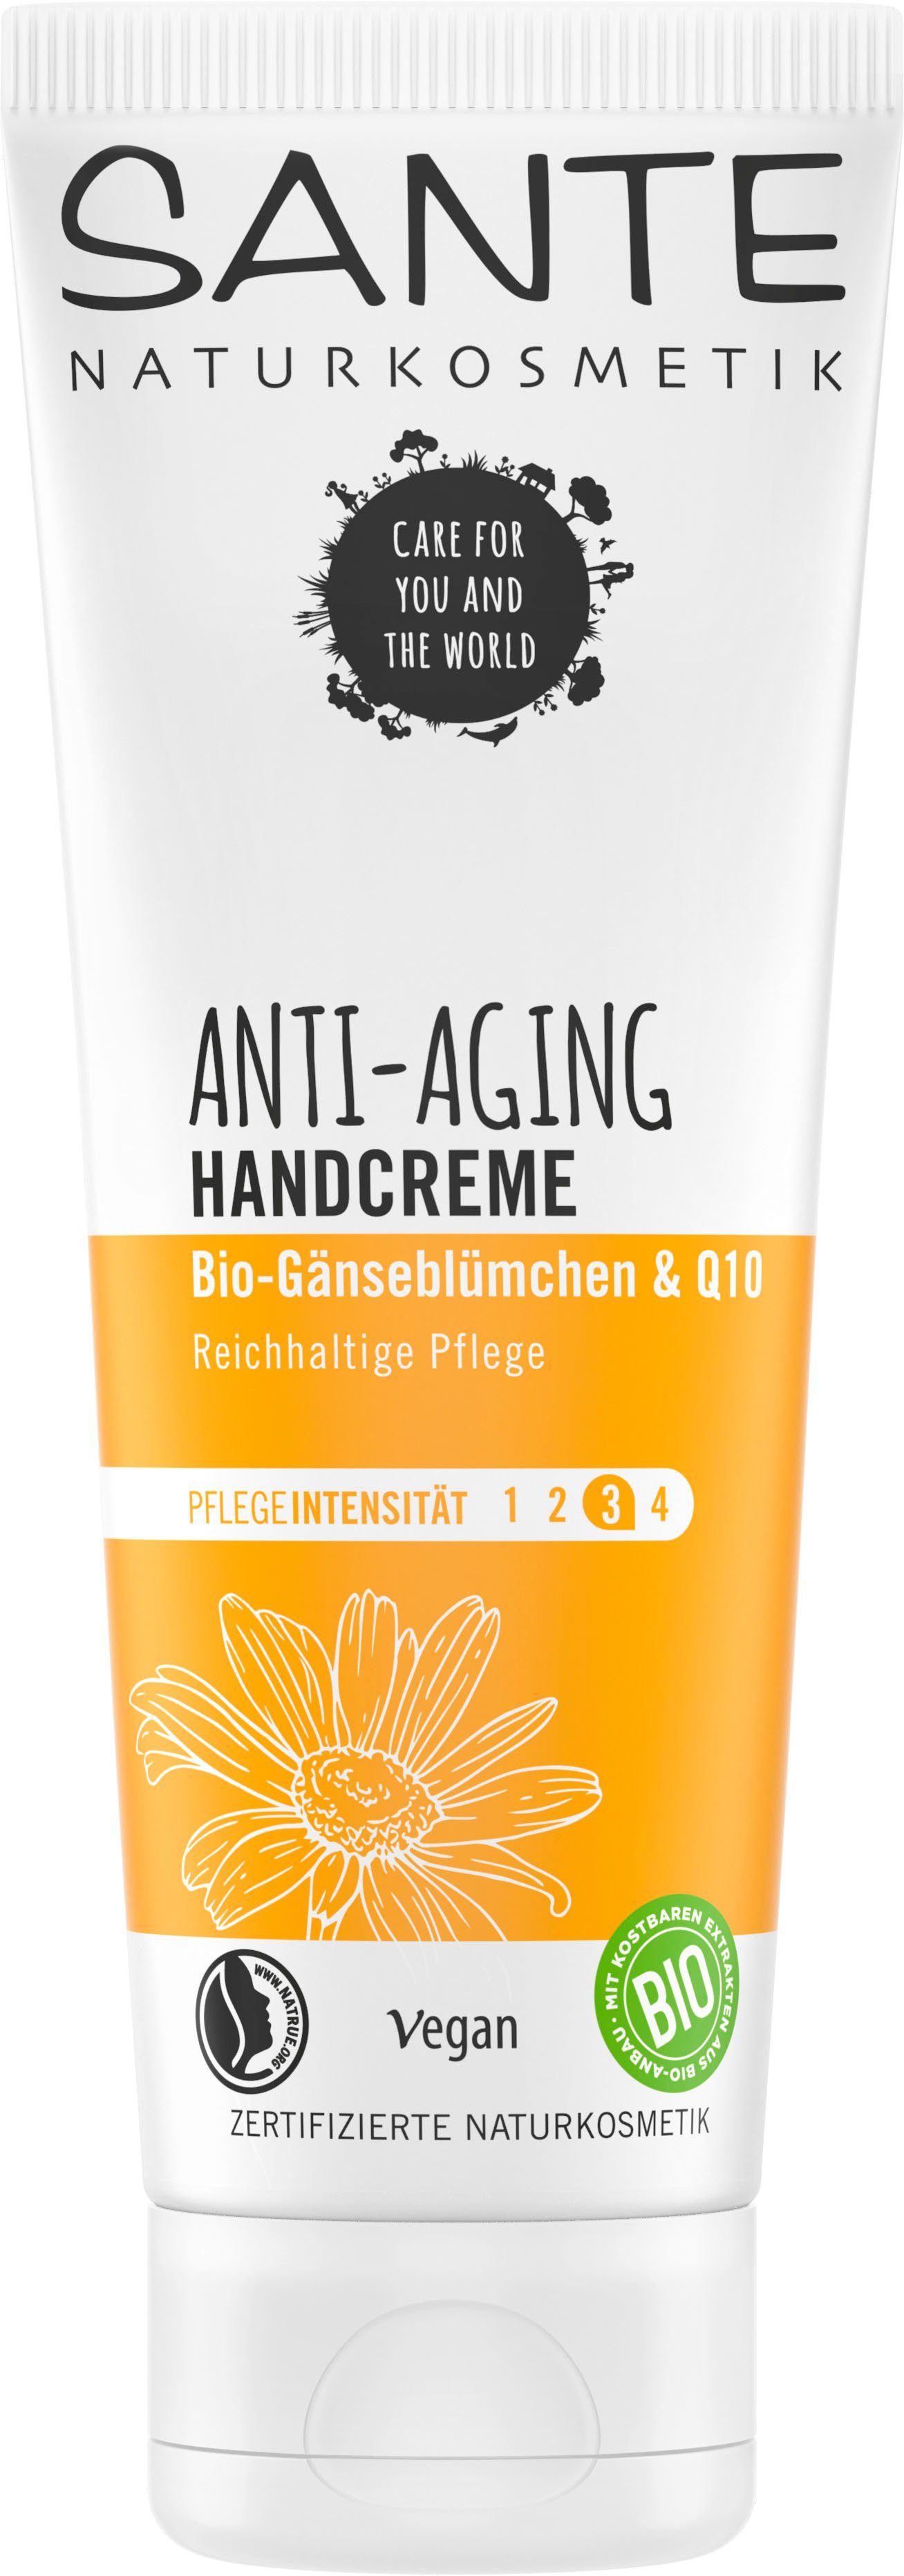 SANTE Handcreme ANTI-AGING | Handcremes